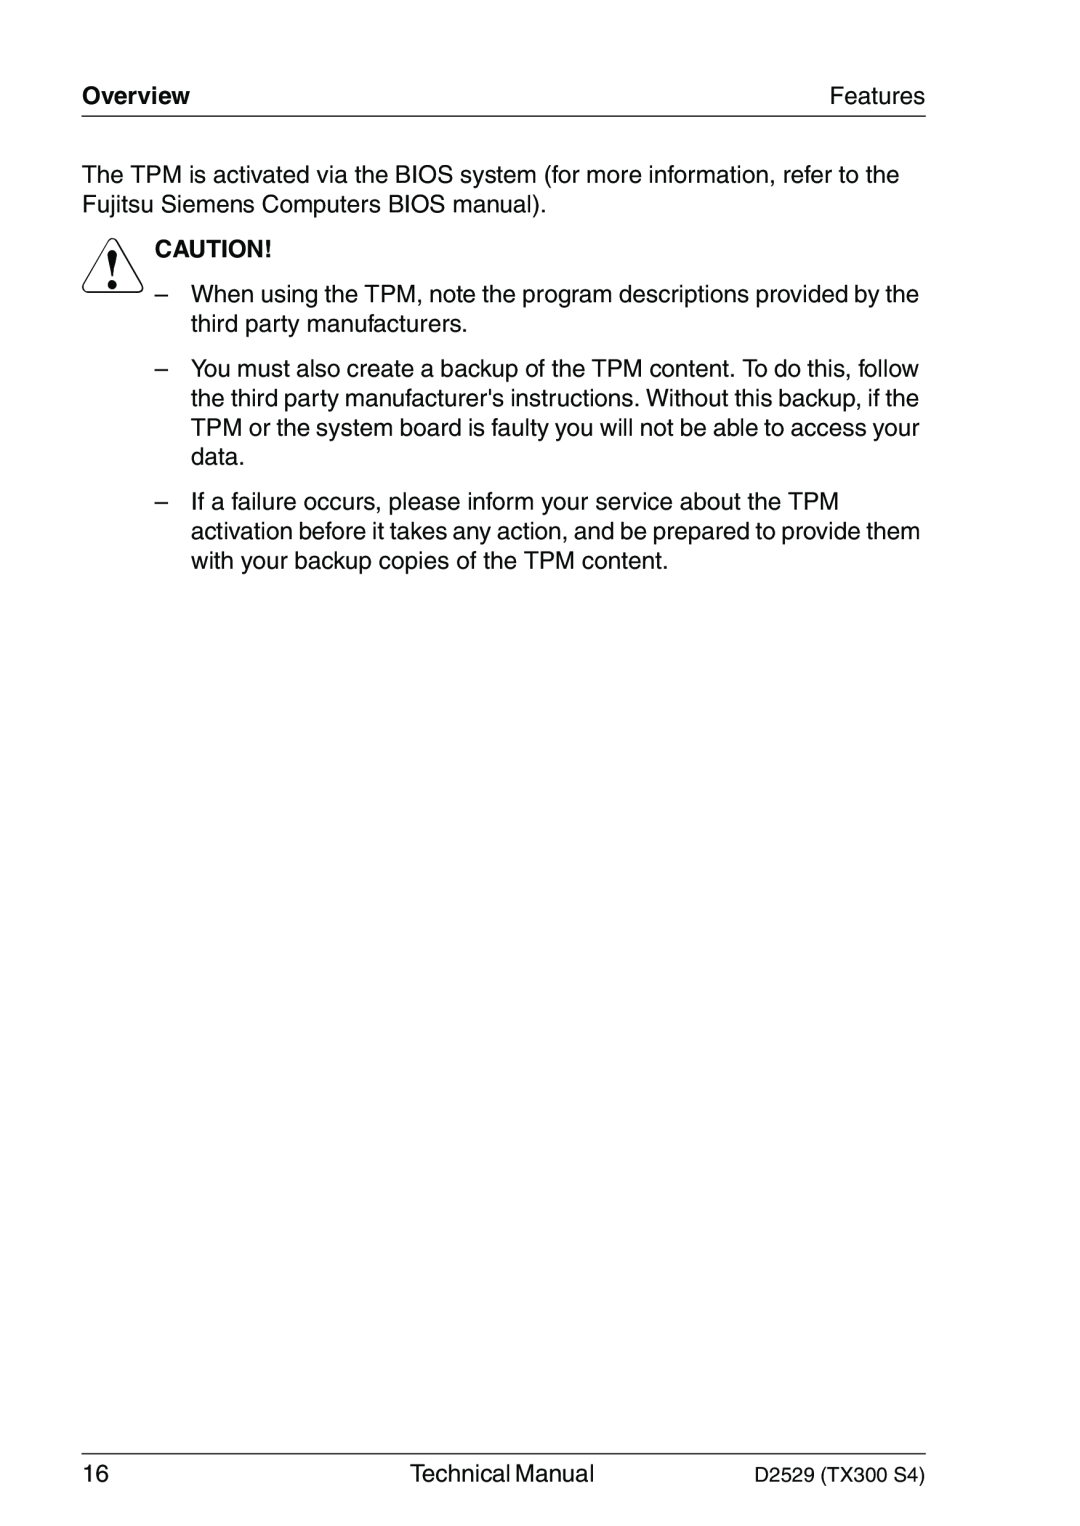 Fujitsu D2529 technical manual Overview, V Caution 